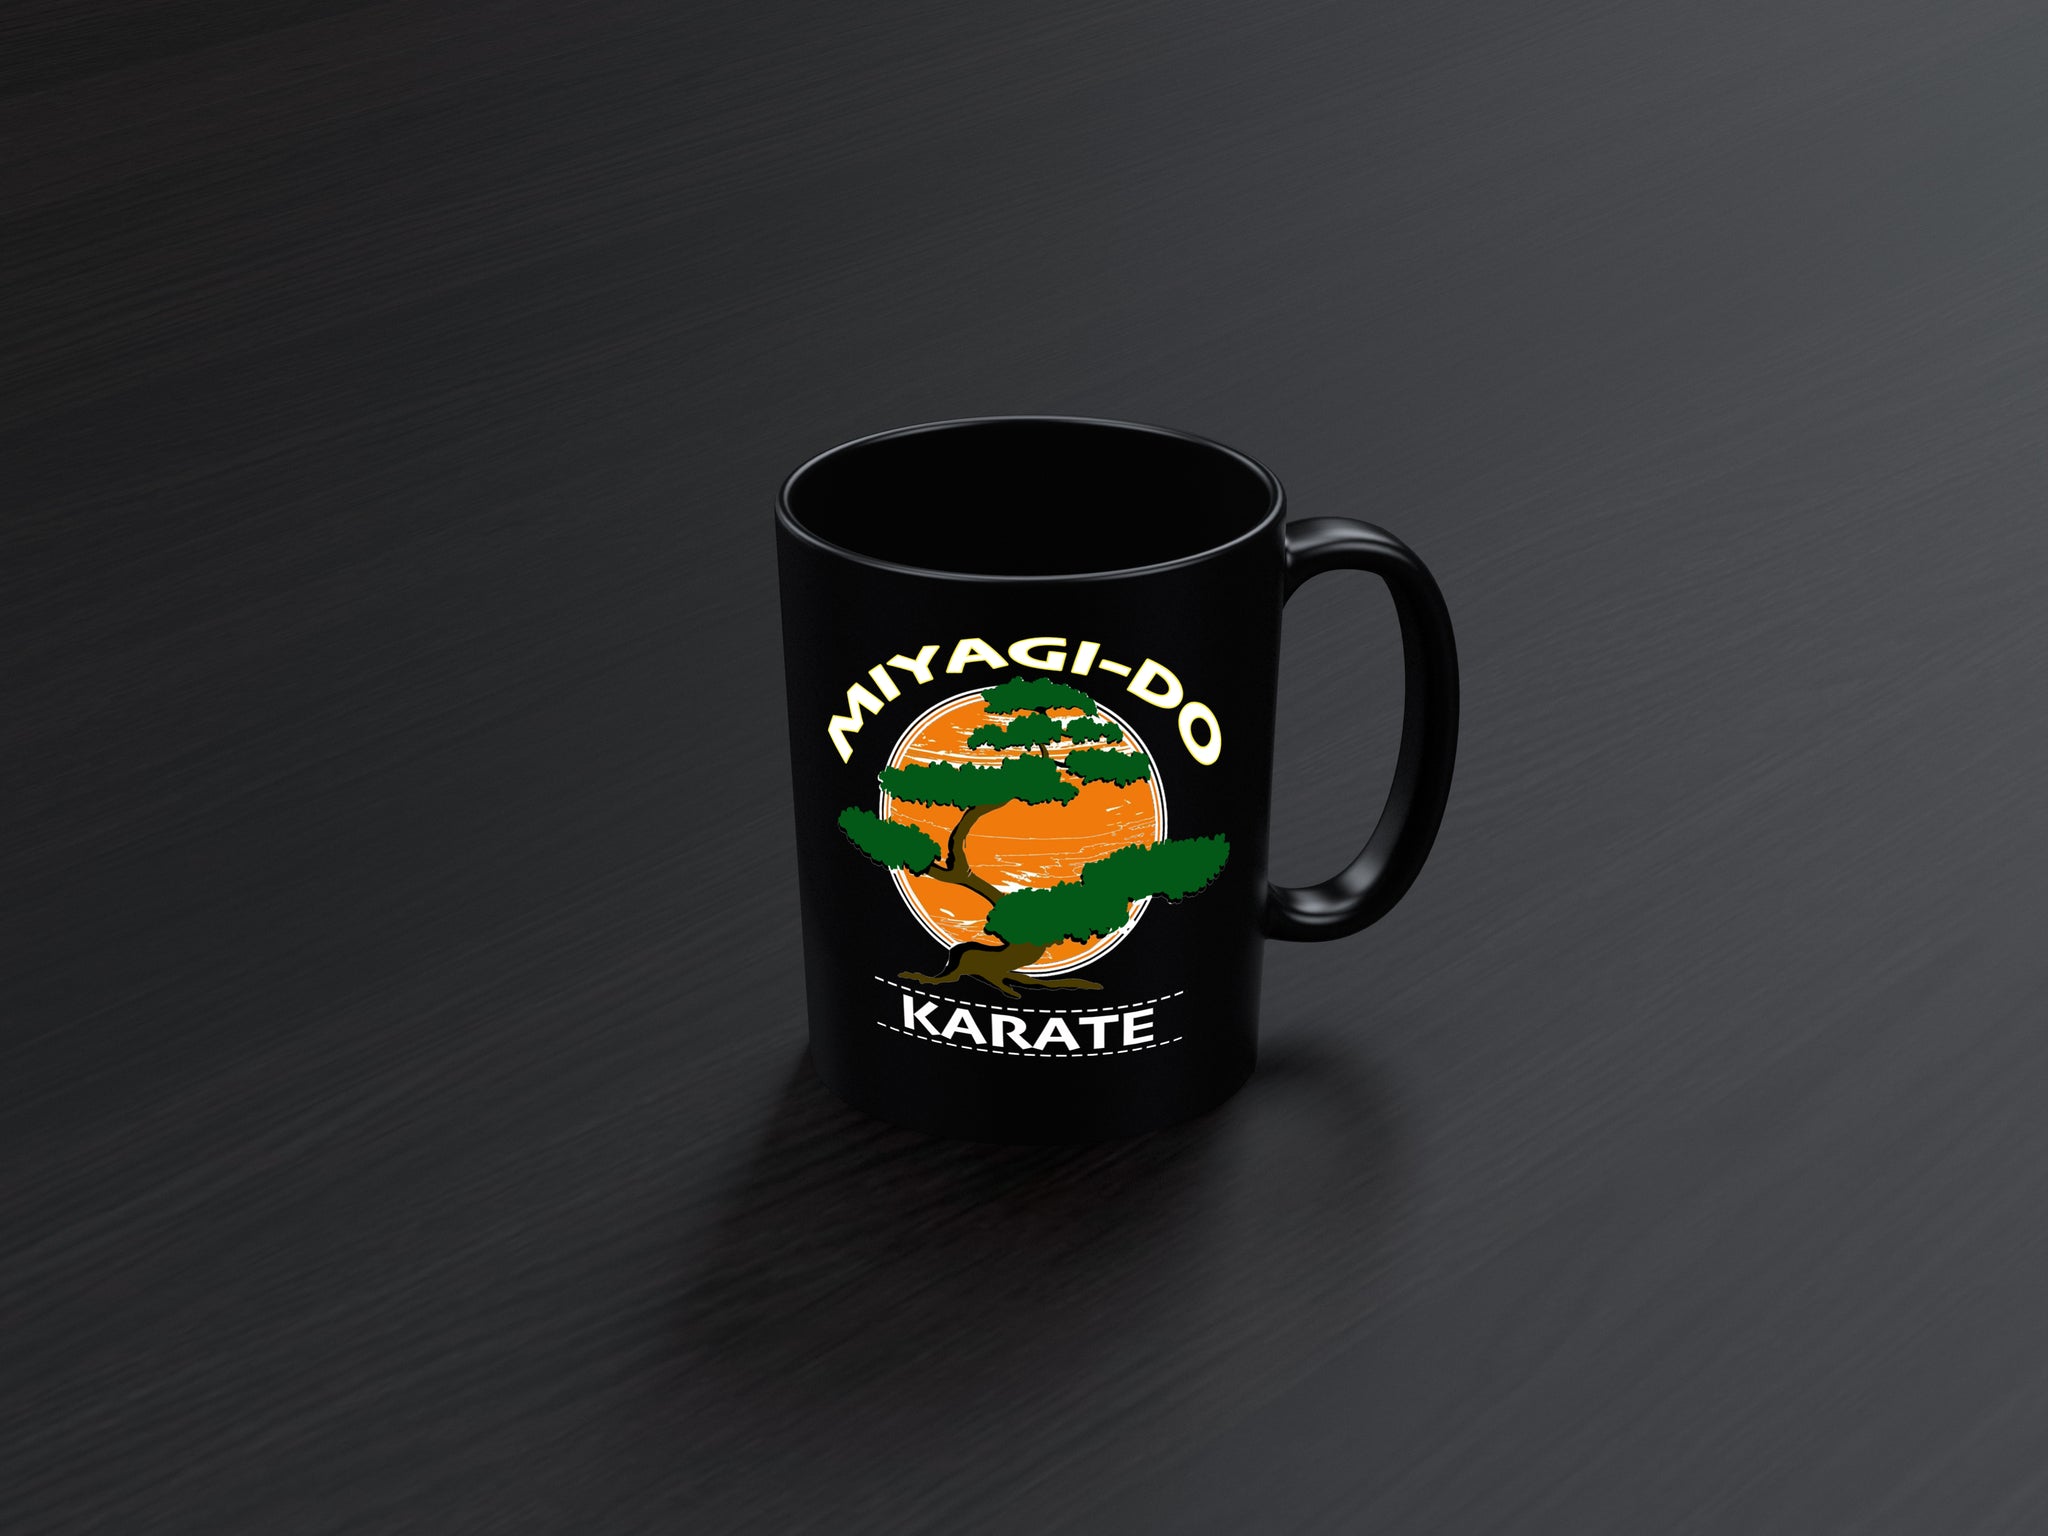 Skitongifts Funny Ceramic Coffee Mug For Birthday, Mother's Day, Father's Day, Christmas Miyagido Karate Kid